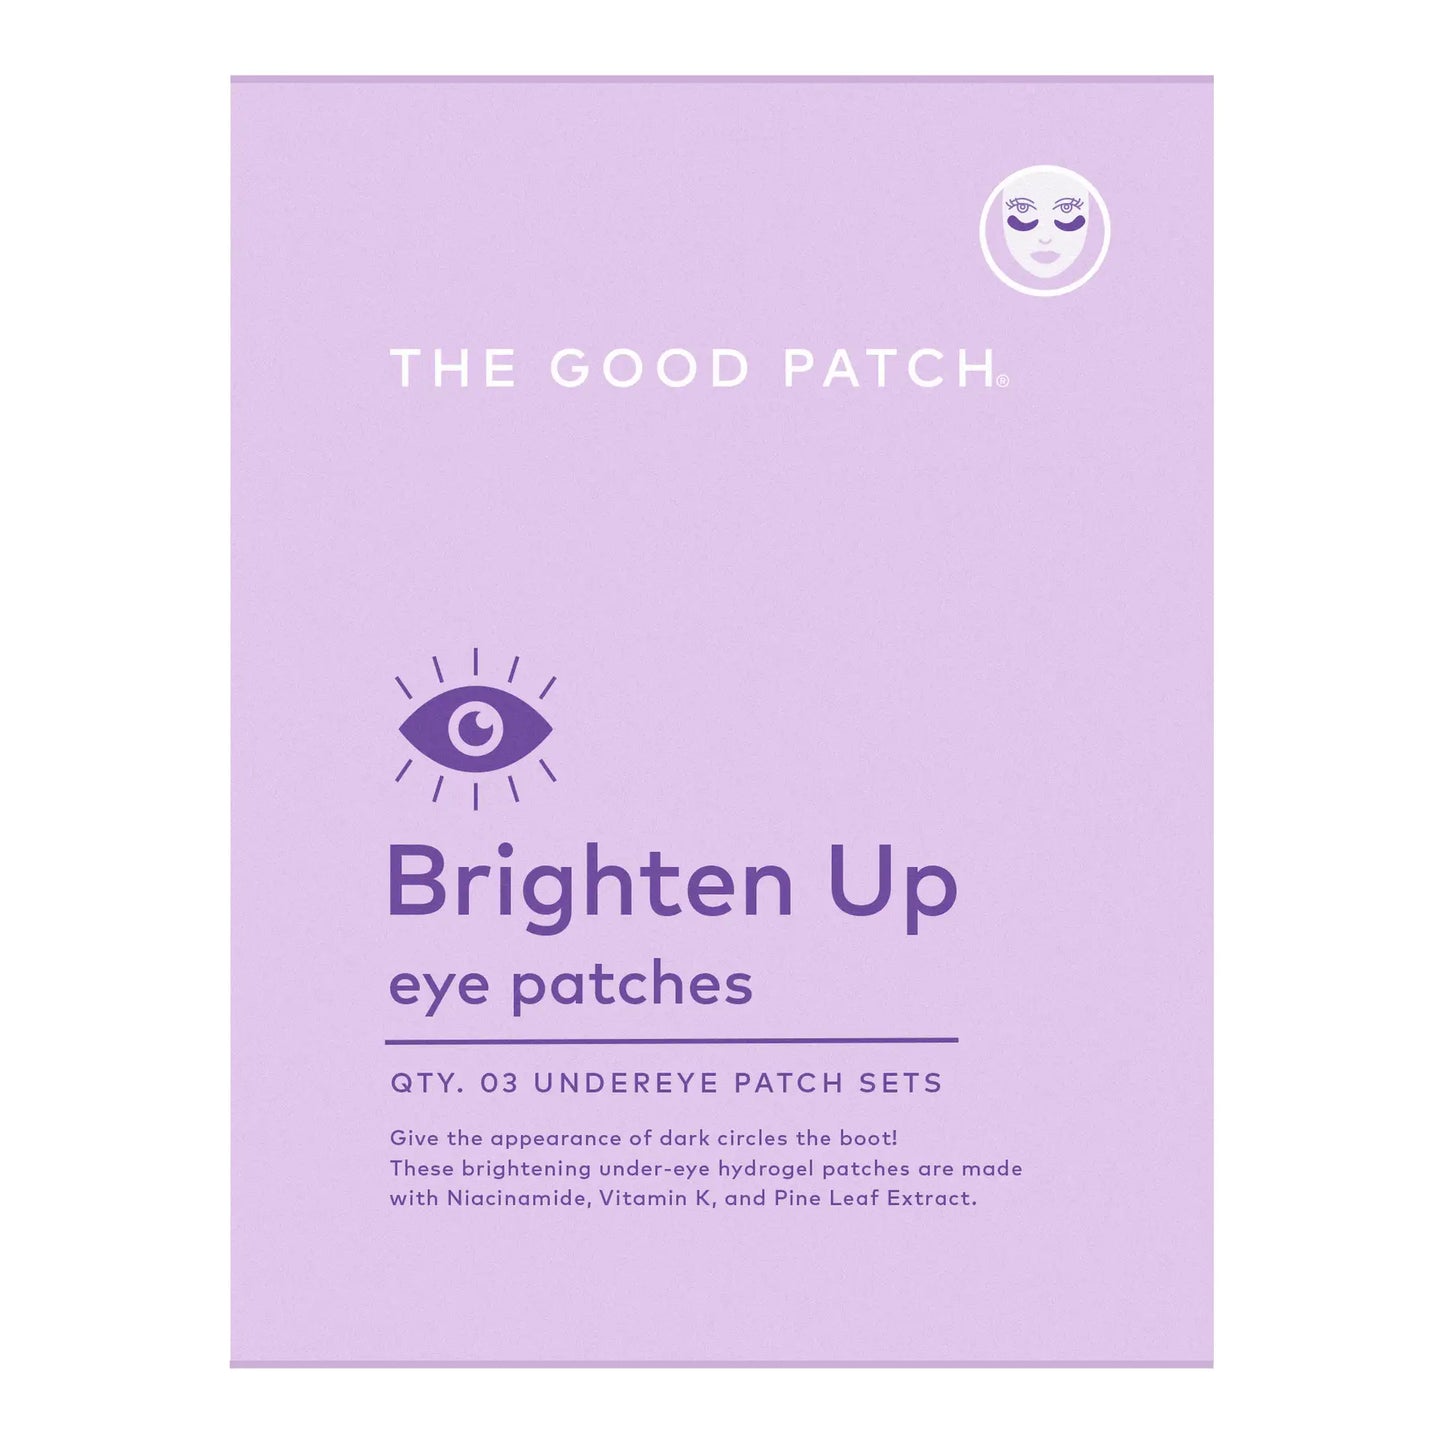 brighten-up patches